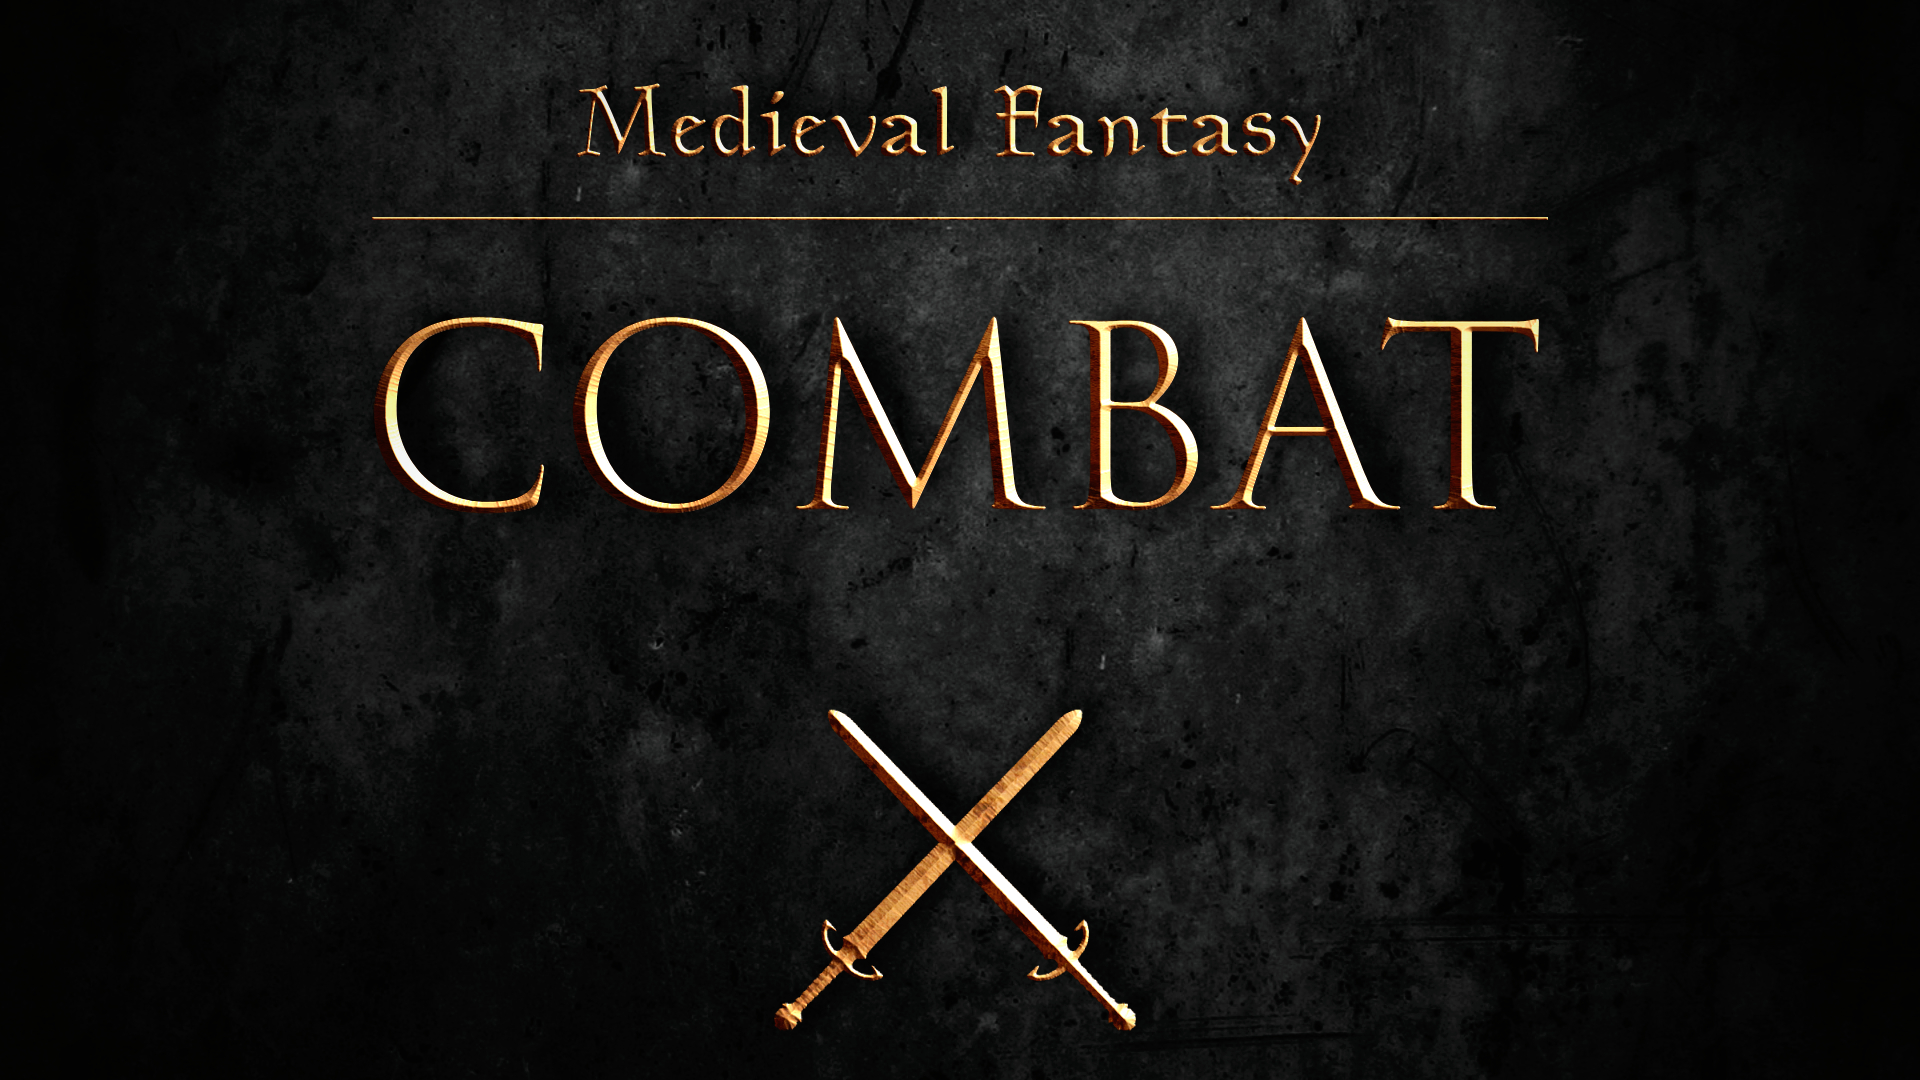 Medieval Fantasy Combat III